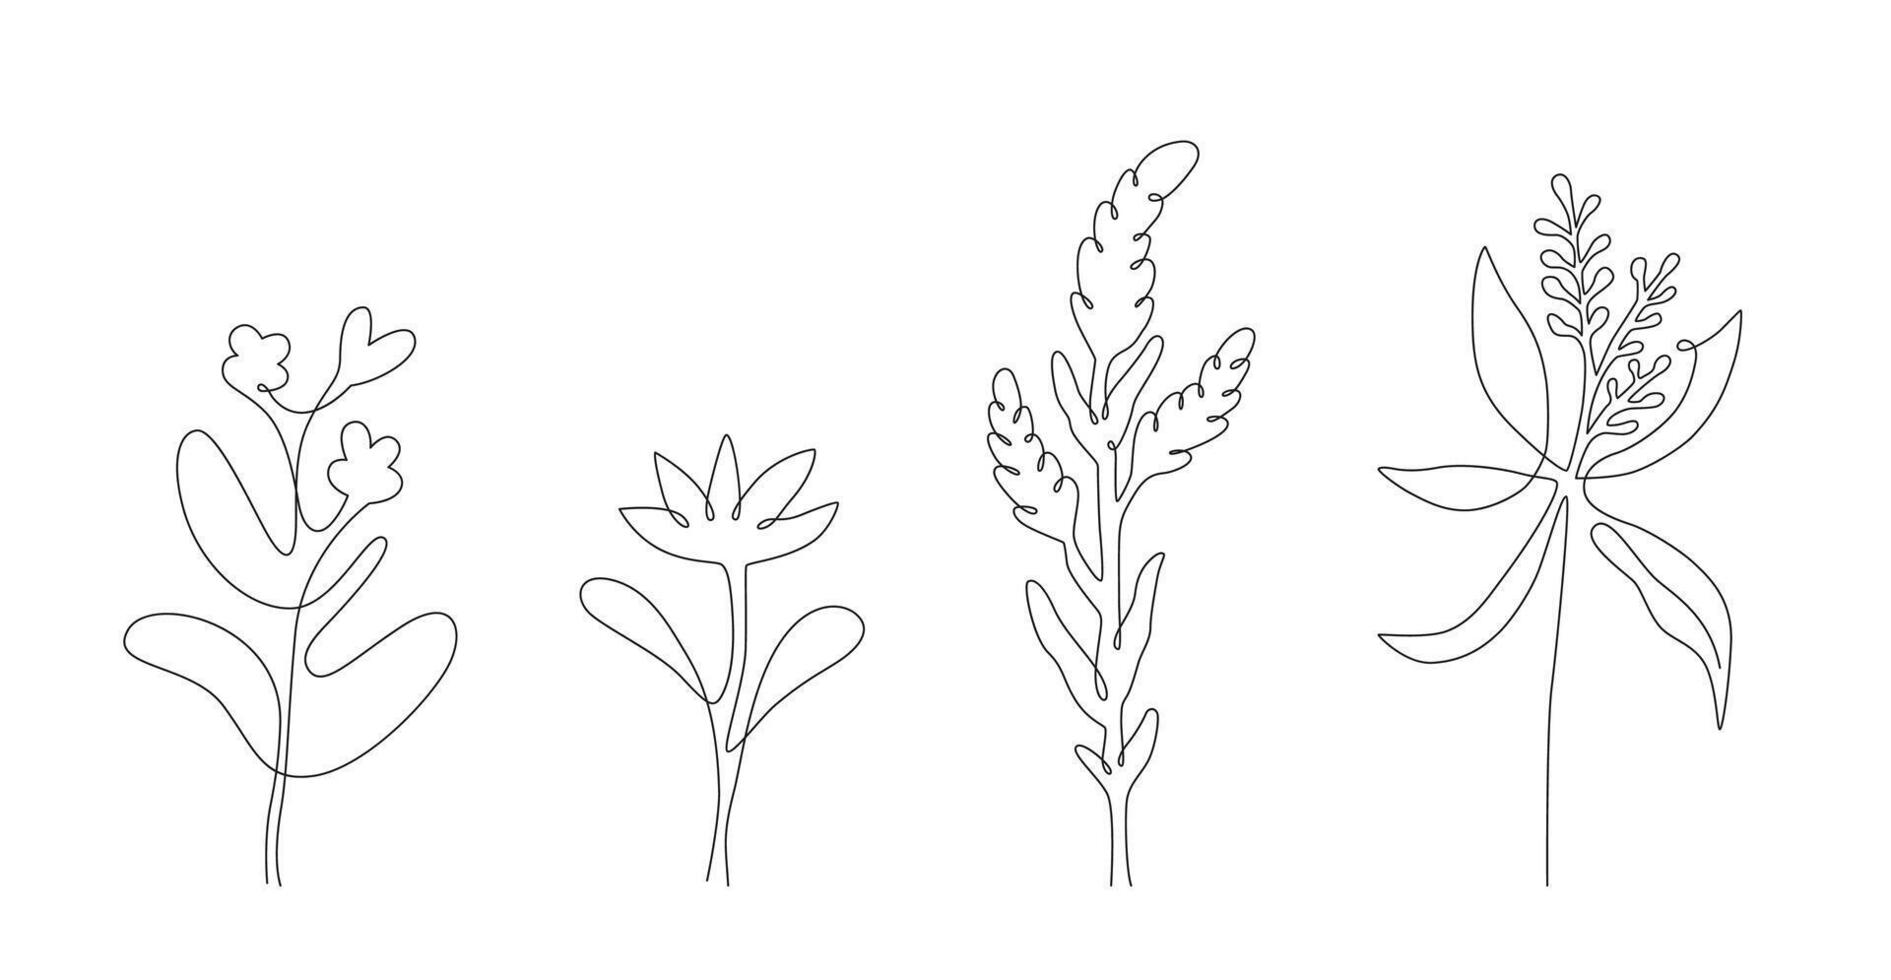 Wildflowers set in line art minimalist style vector